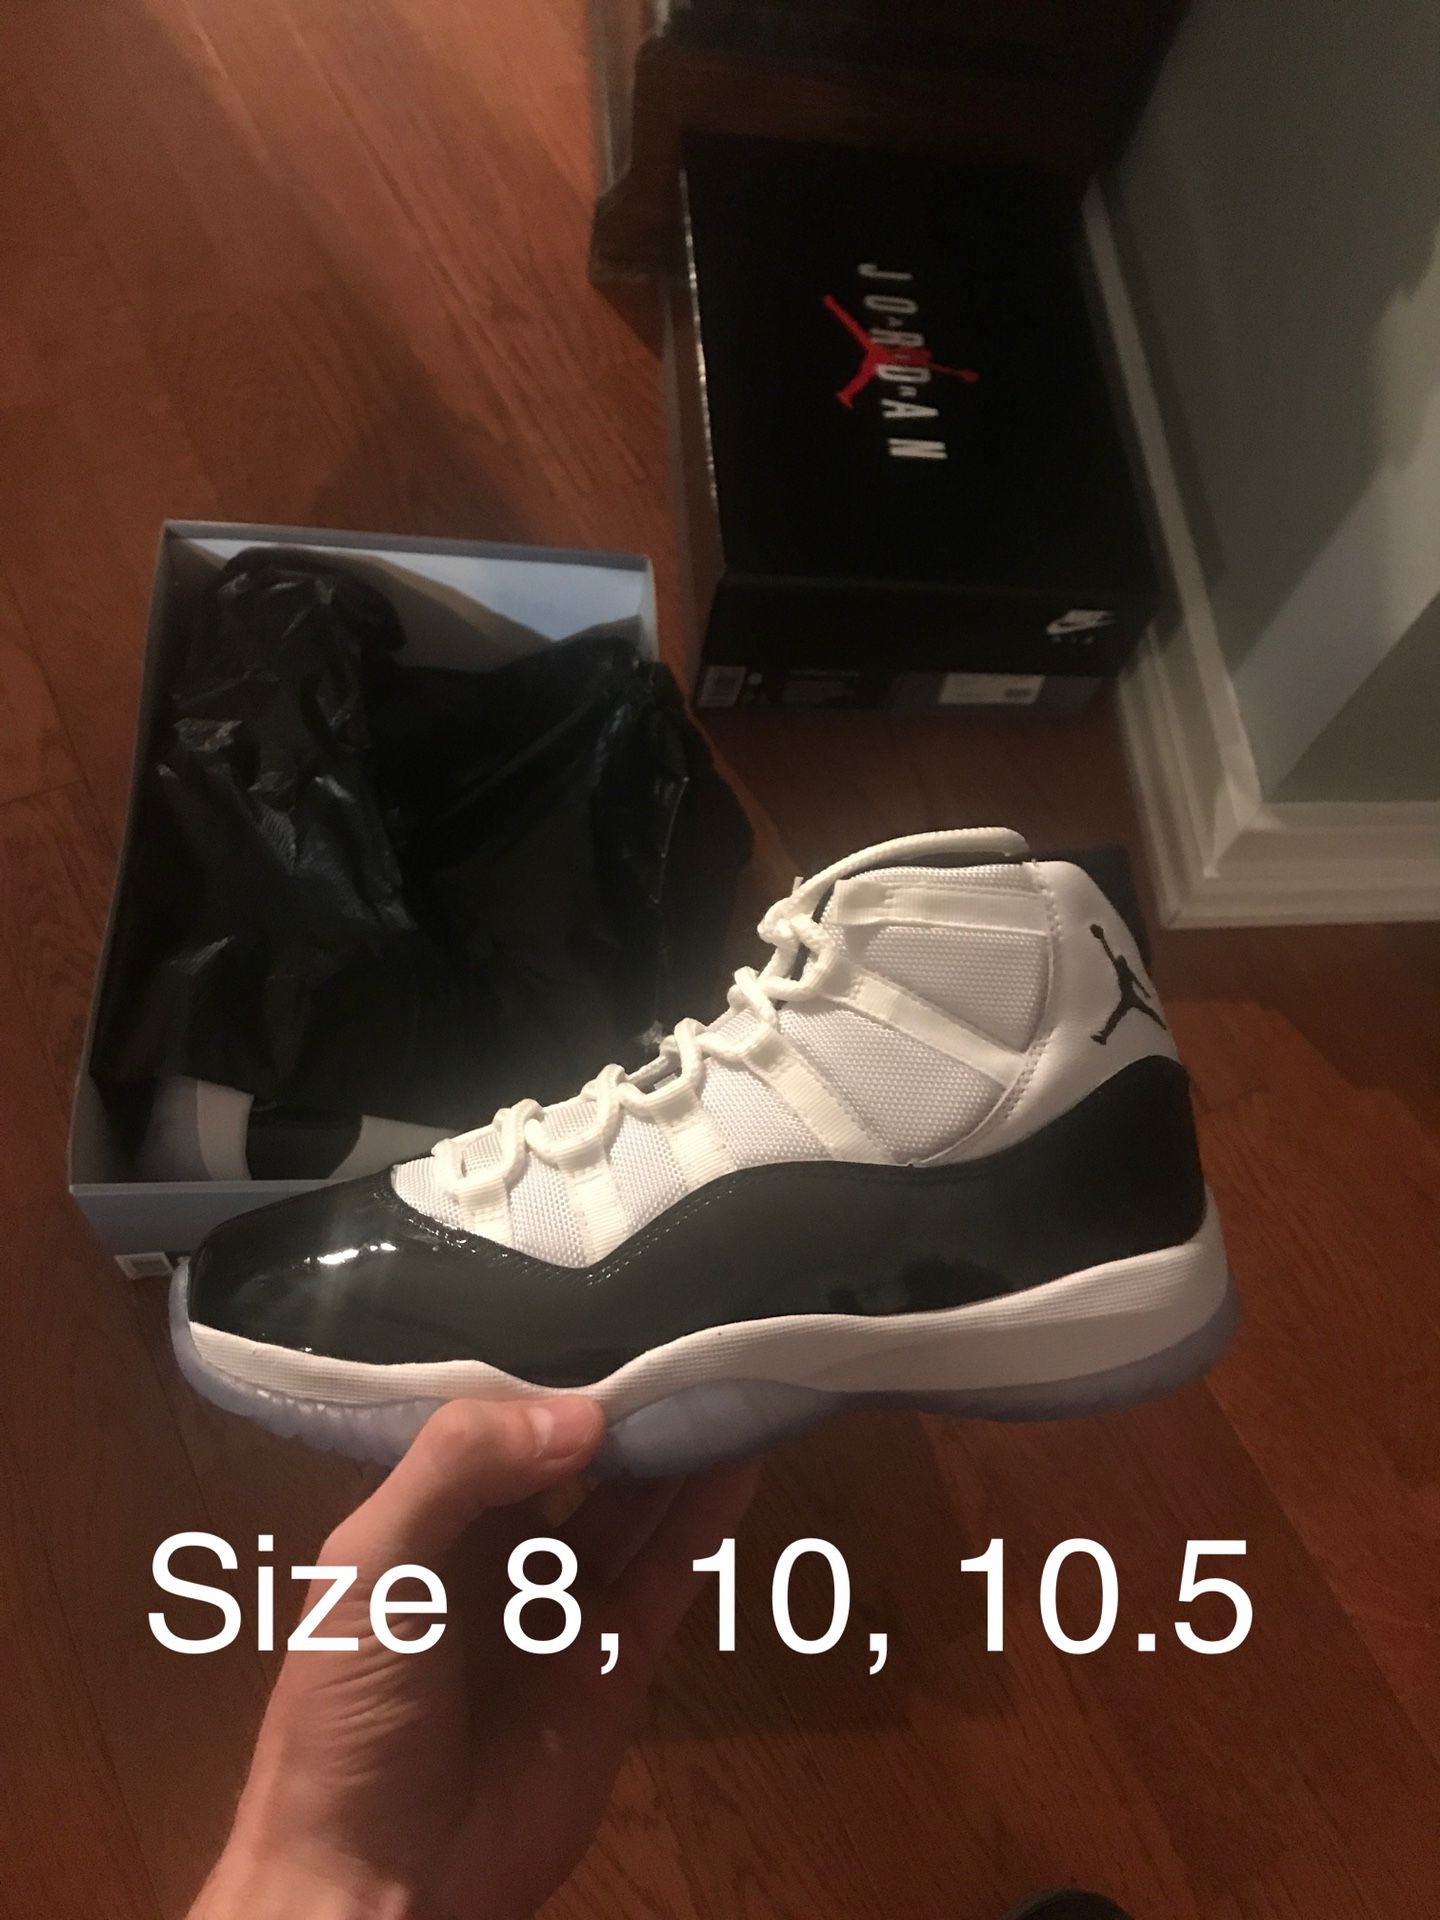 Jordan 11 Concord Size 8 & 10.5 Left, BRAND NEW